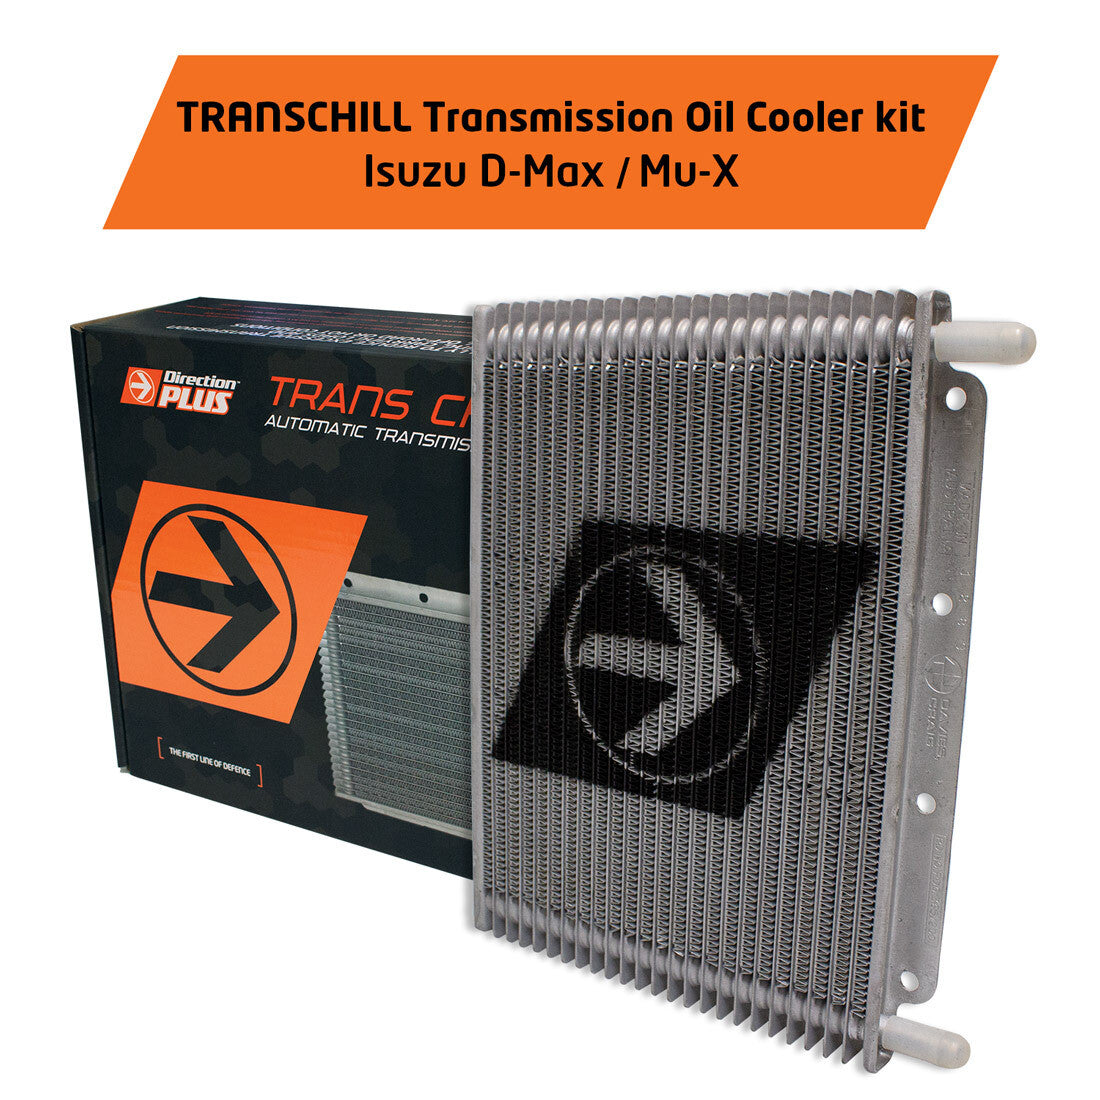 Transchill Transmission Cooler Kit - Isuzu D-Max and MU-X